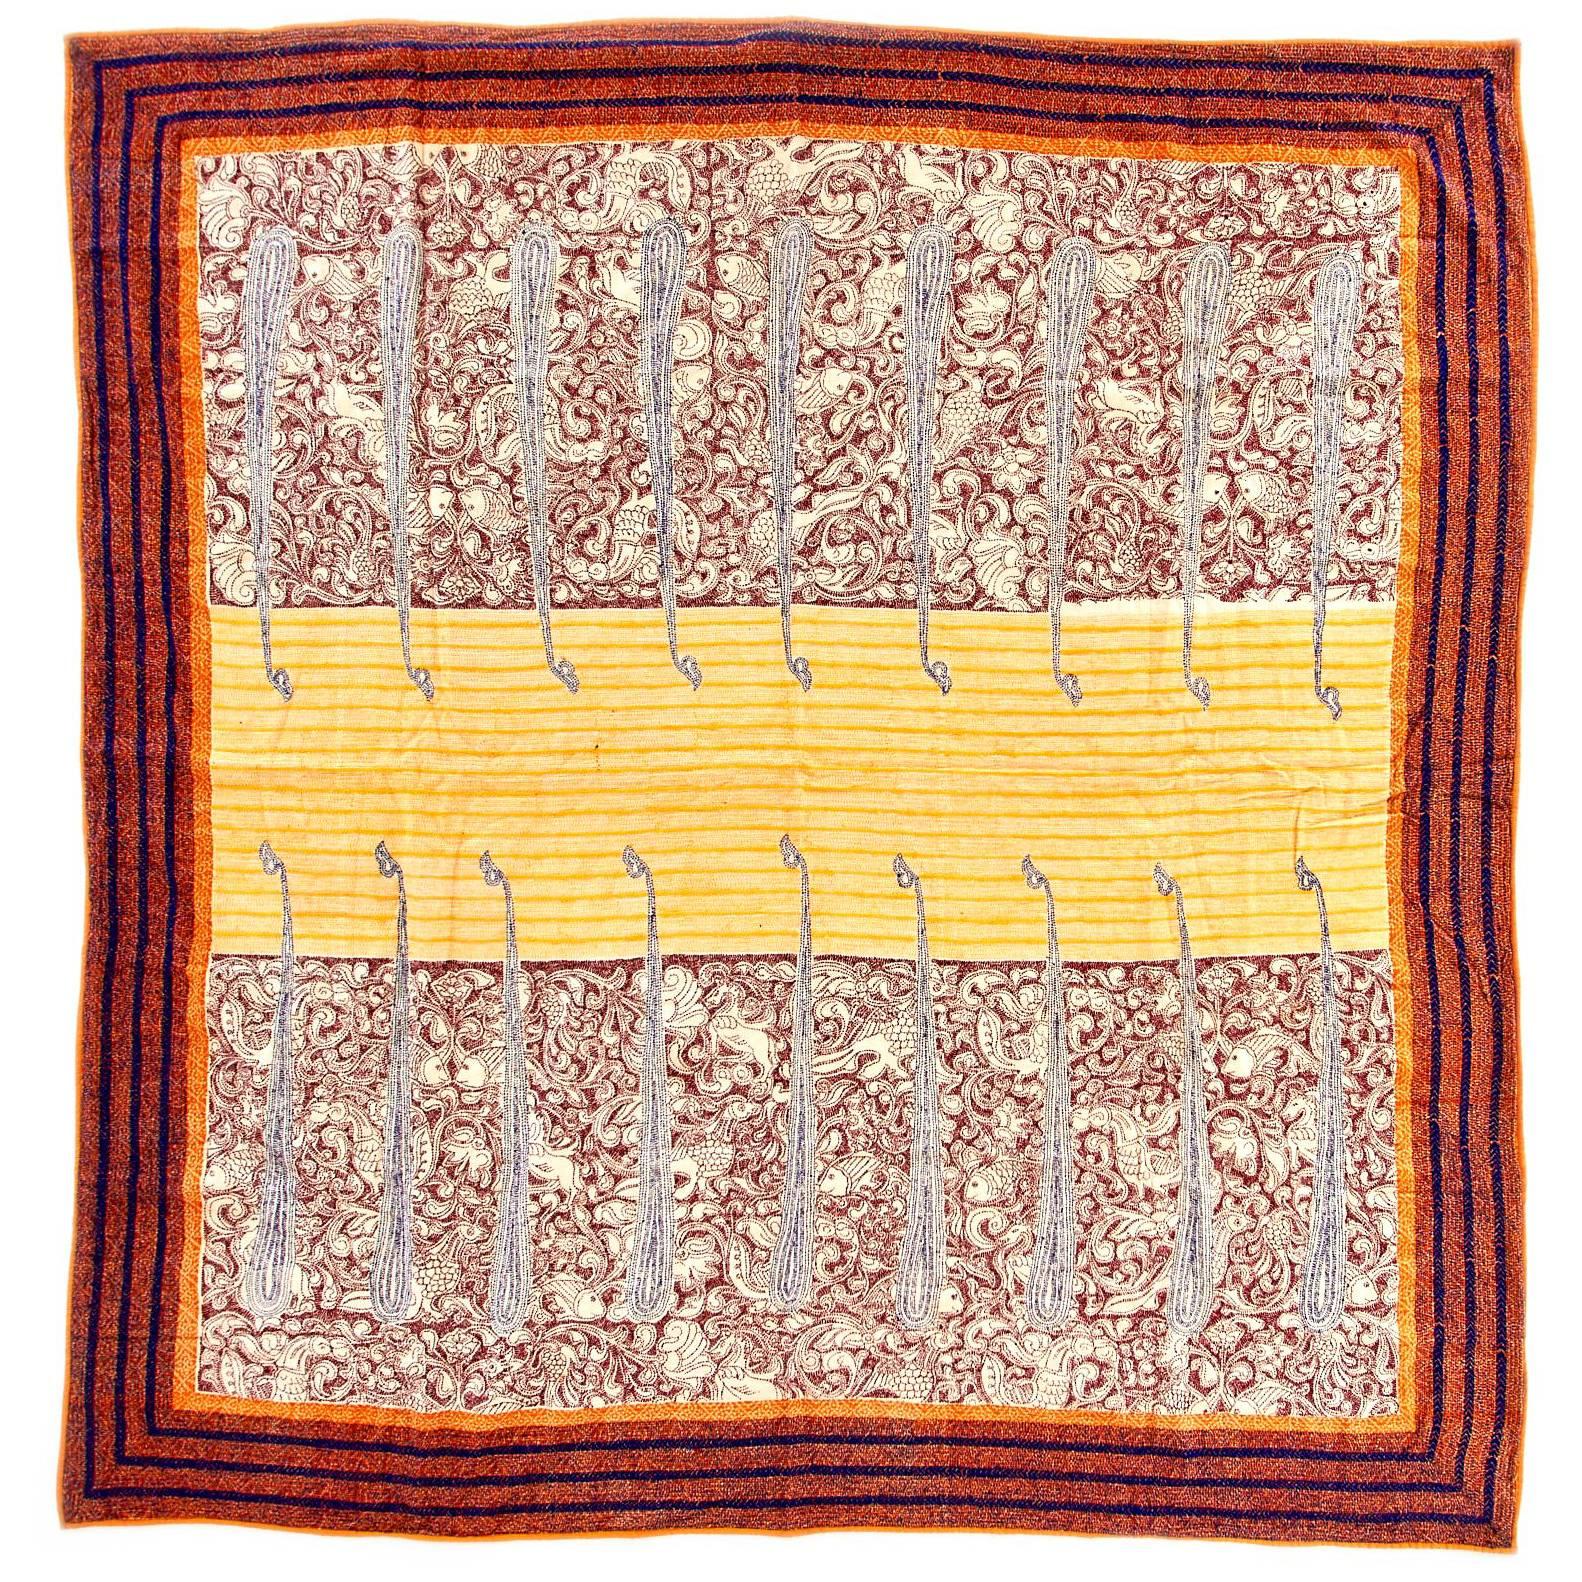 Rare Tribal Kantha Throw Blanket For Sale